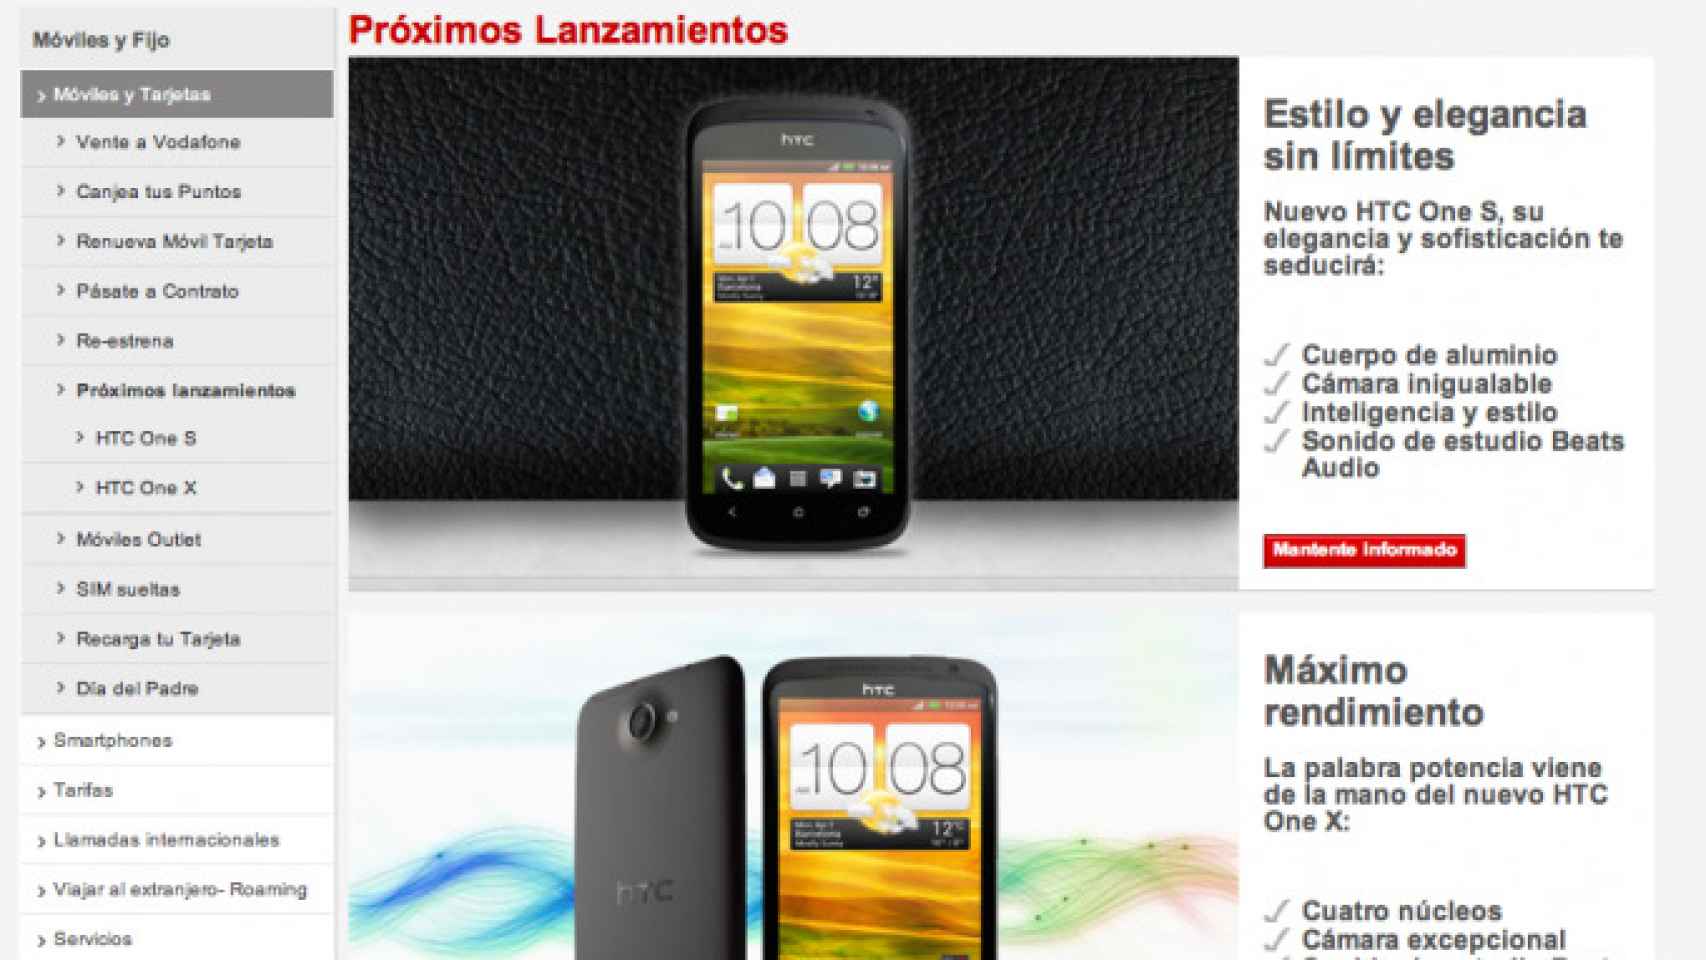 HTC One X y HTC One S ya se anuncian en Vodafone